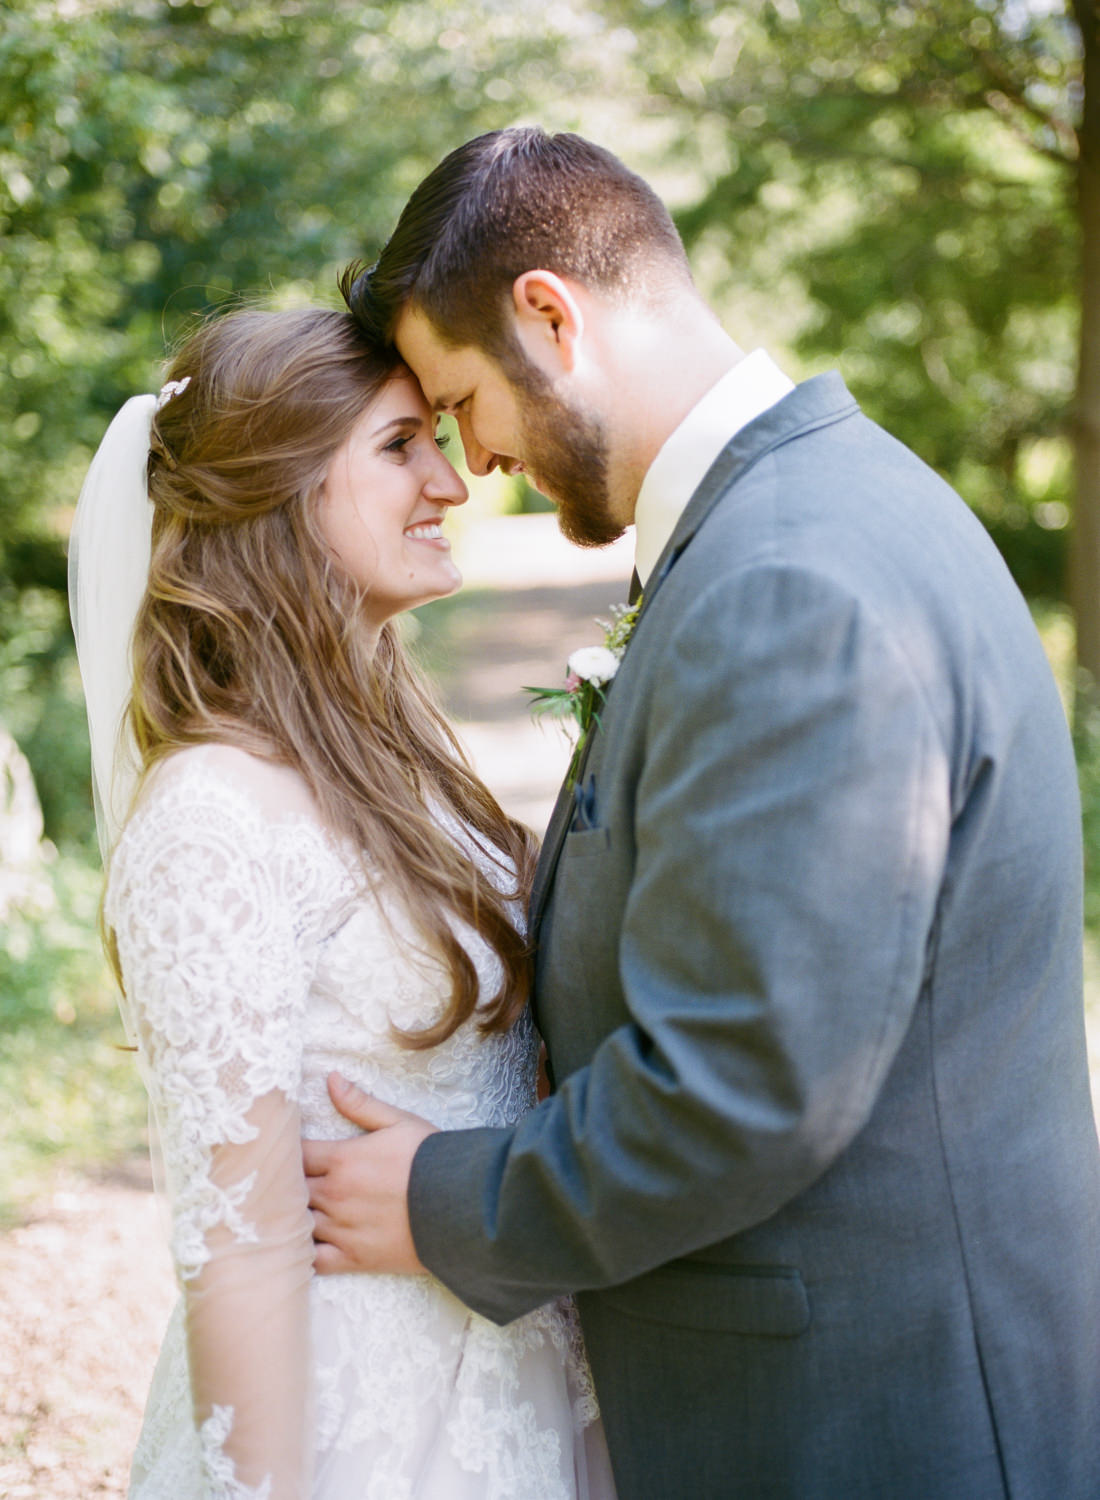 Bride and groom snuggling; St. Louis fine art film wedding photographer Erica Robnett Photography